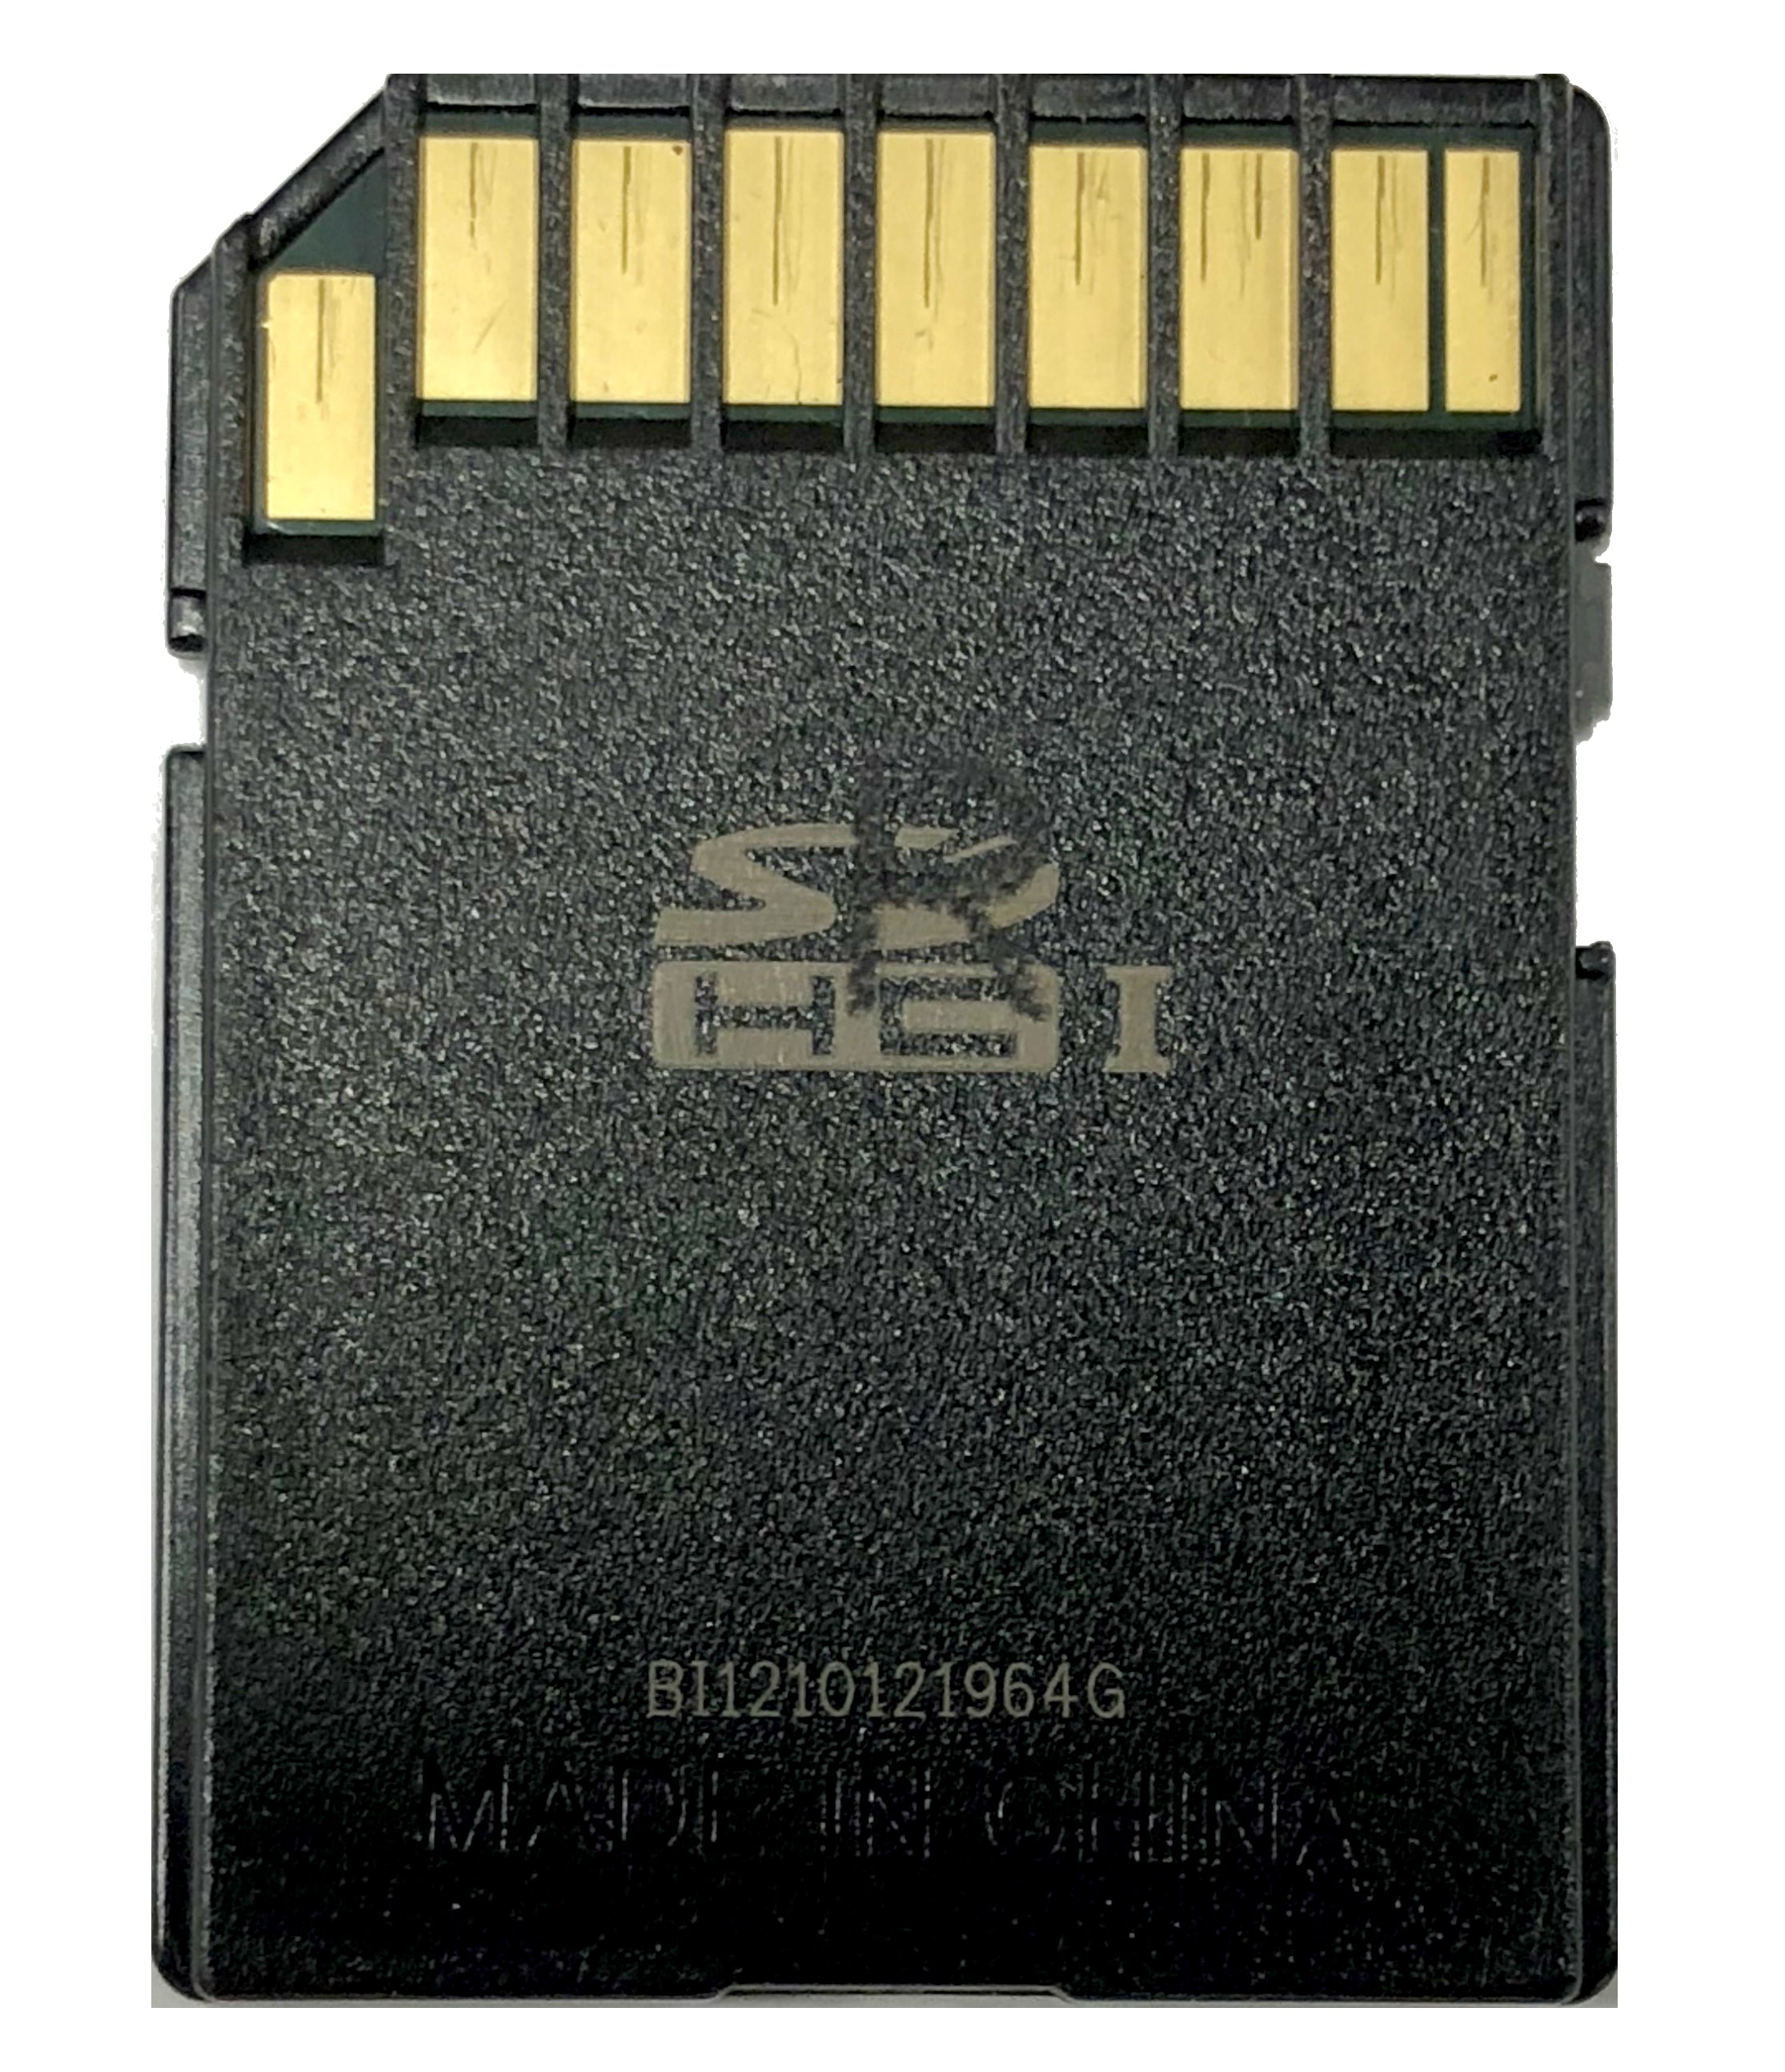 SanDisk Ultra 8GB SDHC Class 6 UHS-1 SDSDU-008G 30MB/S (Certified Refurbished)